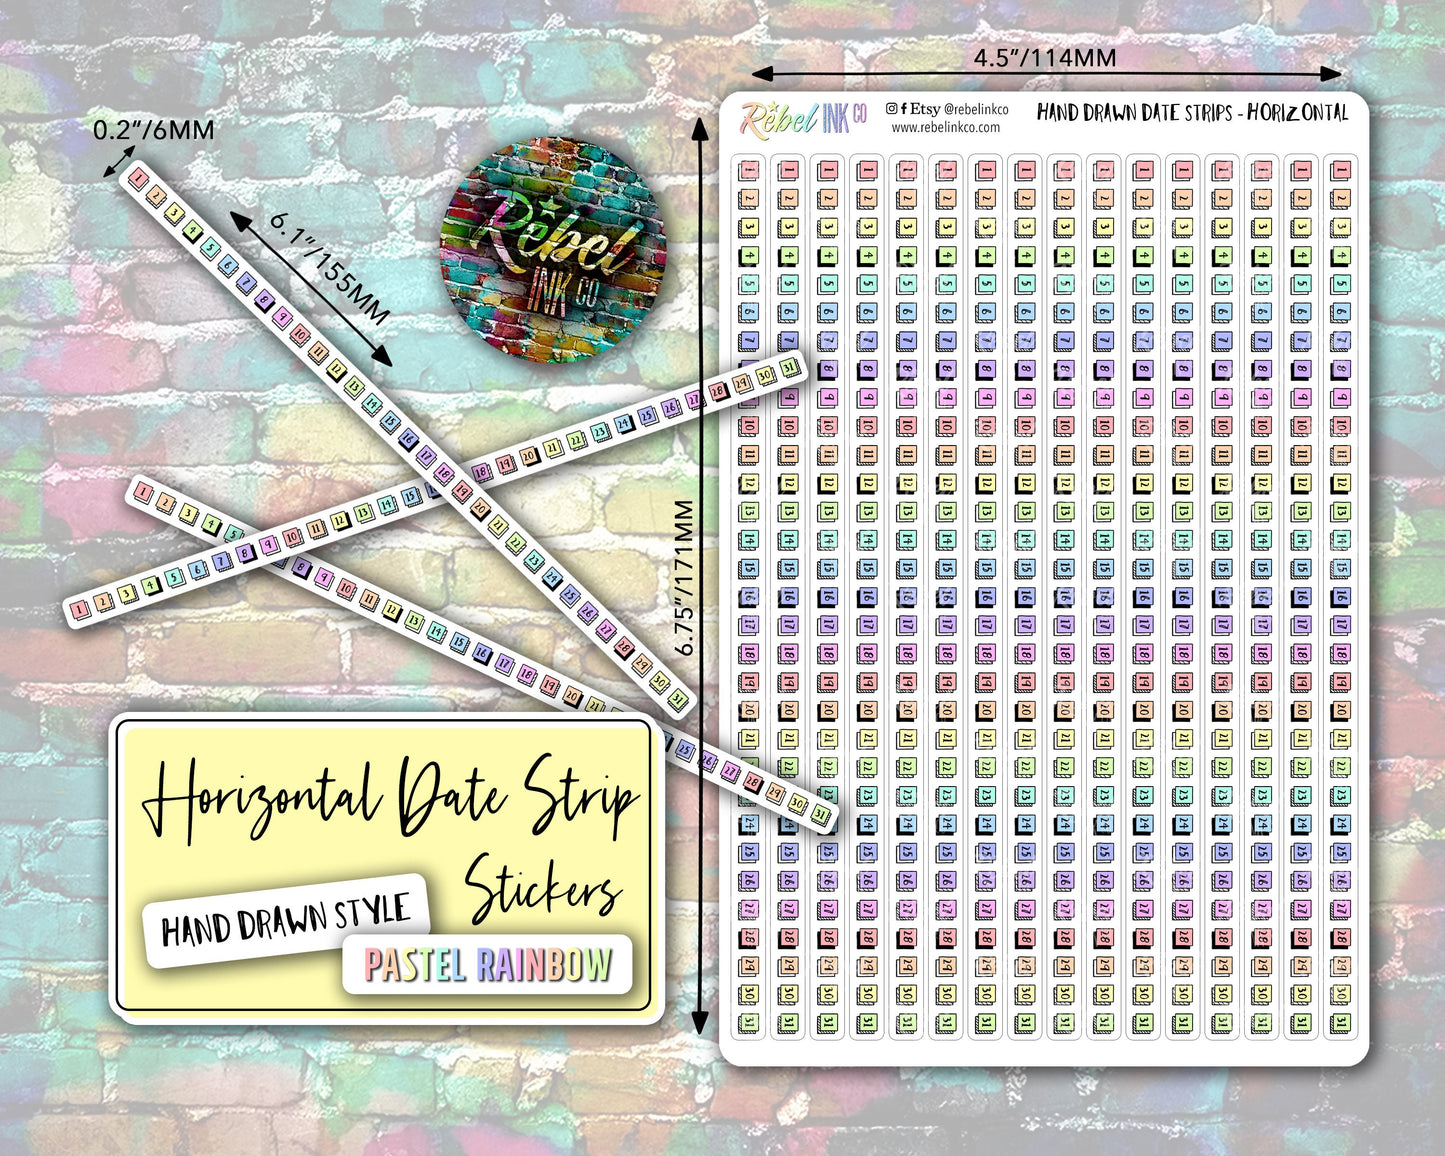 Horizontal Date Strip Stickers - Pastel Rainbow - Hand Drawn Style